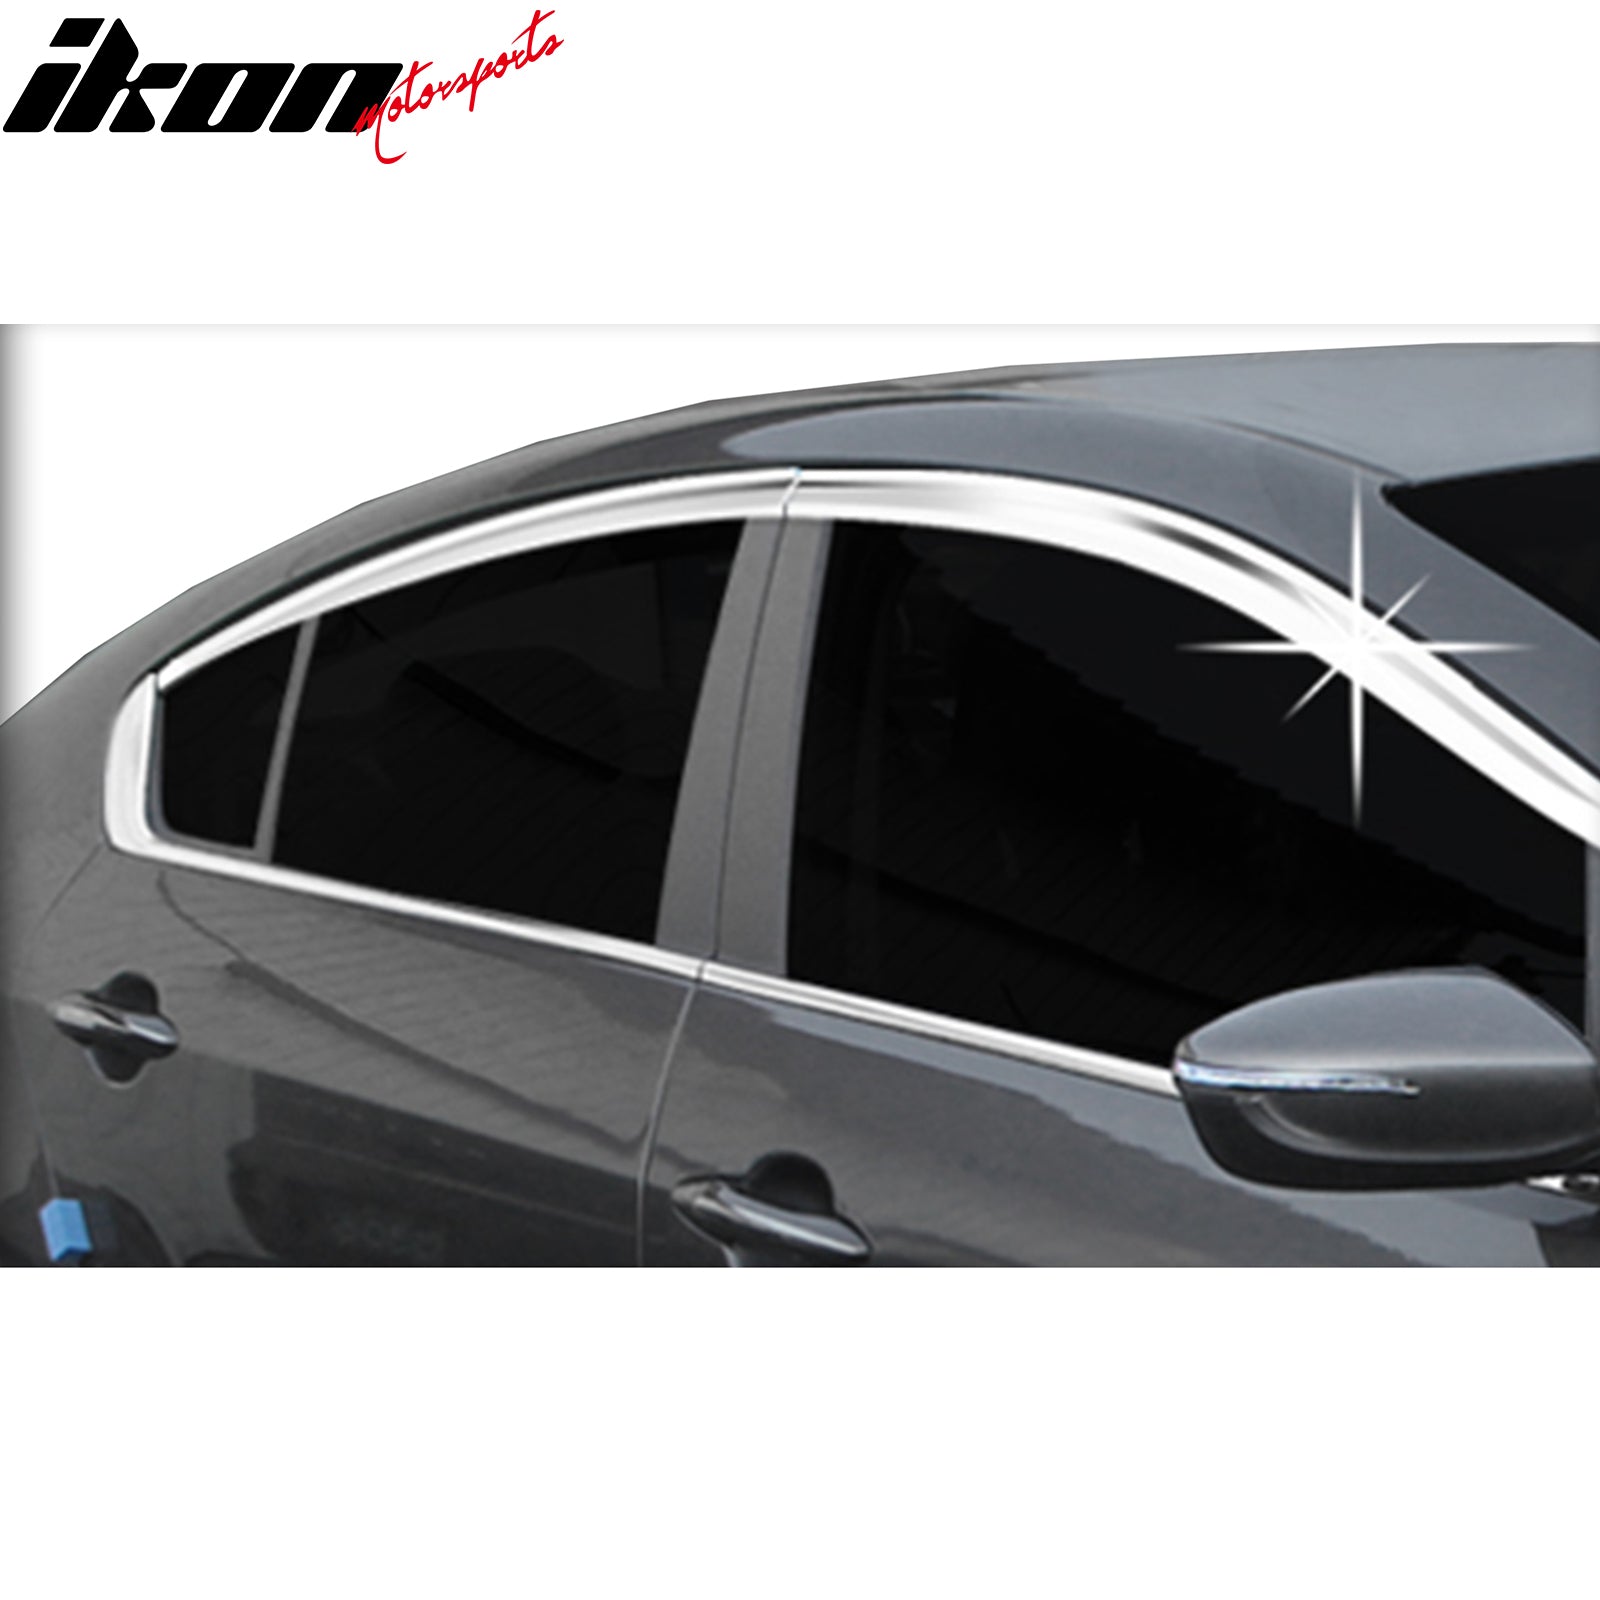 IKON MOTORSPORTS Tape on Window Visors Compatible with 2014-2018 Kia Forte Sedan, ABS Chrome Rain Guards, Side Window Wind Deflectors 4PCS